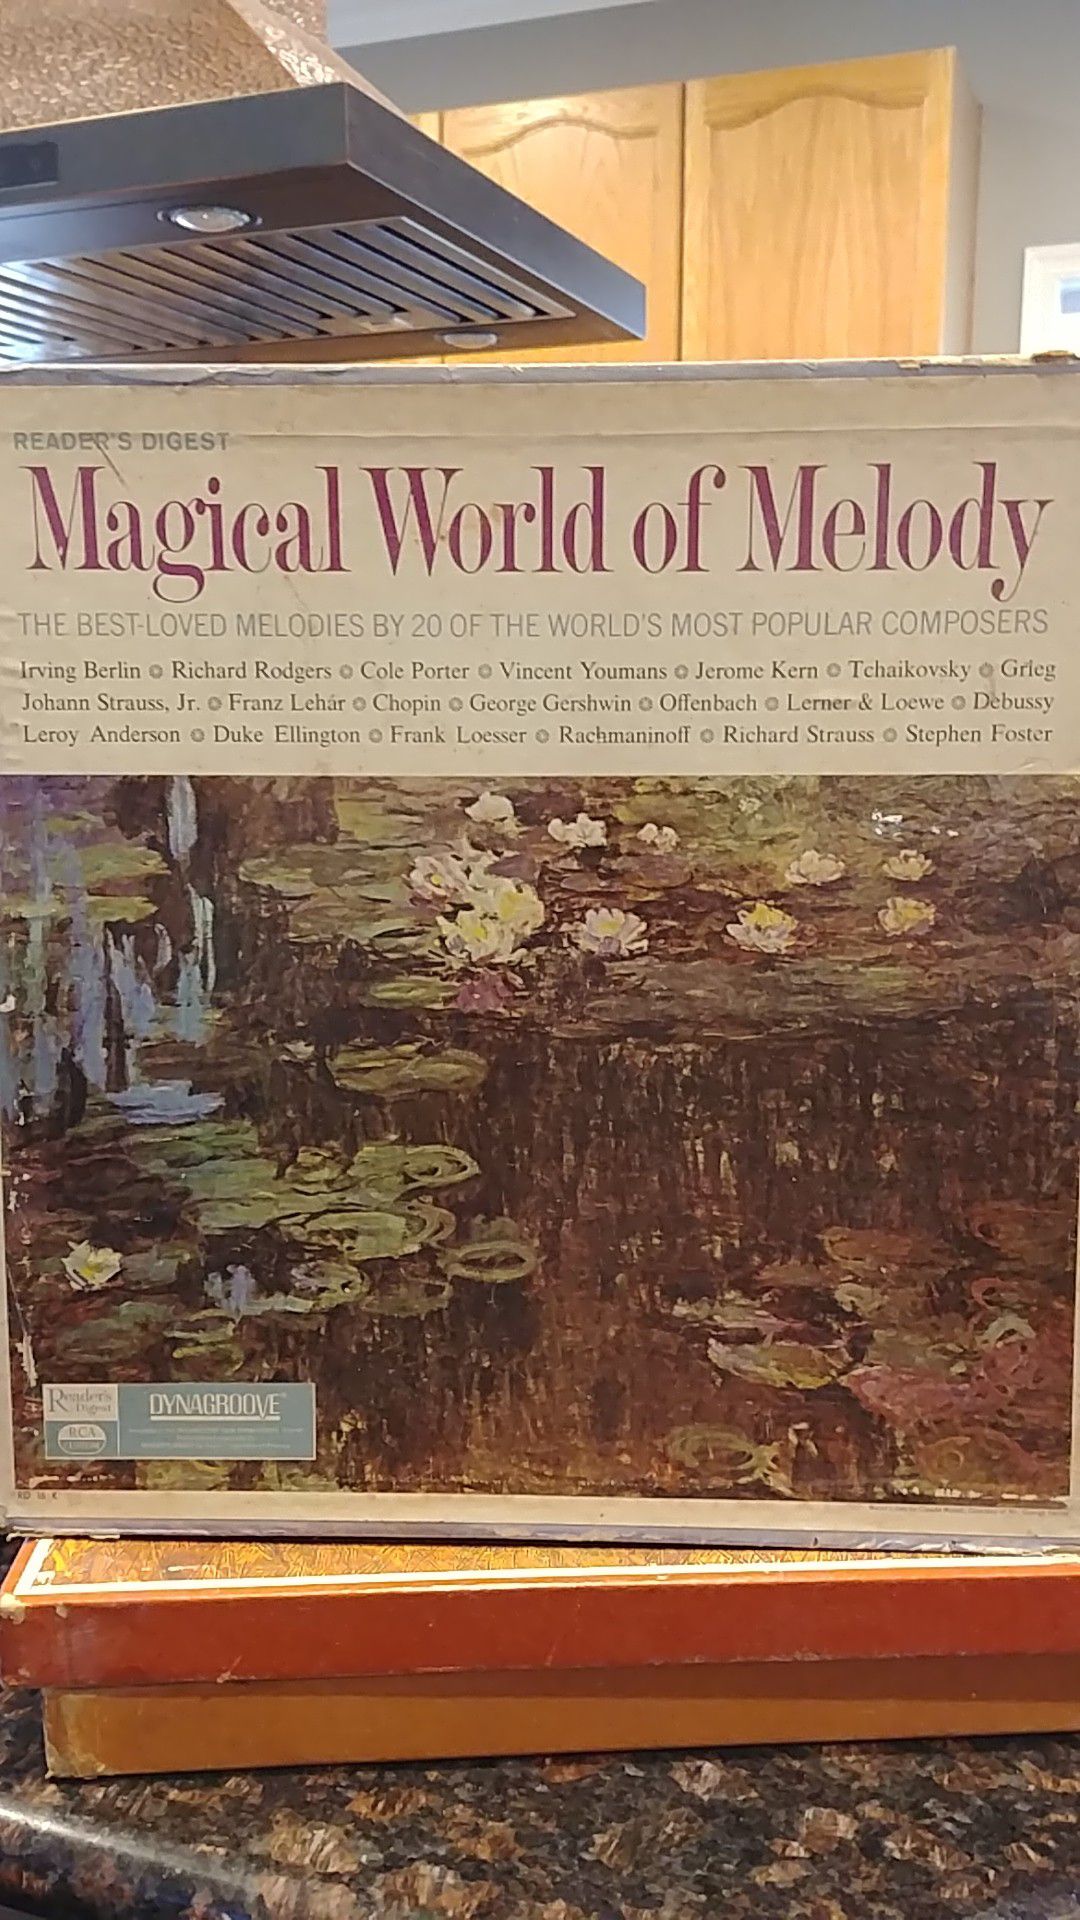 Magical World of Melody 10 Set Vinyl Records